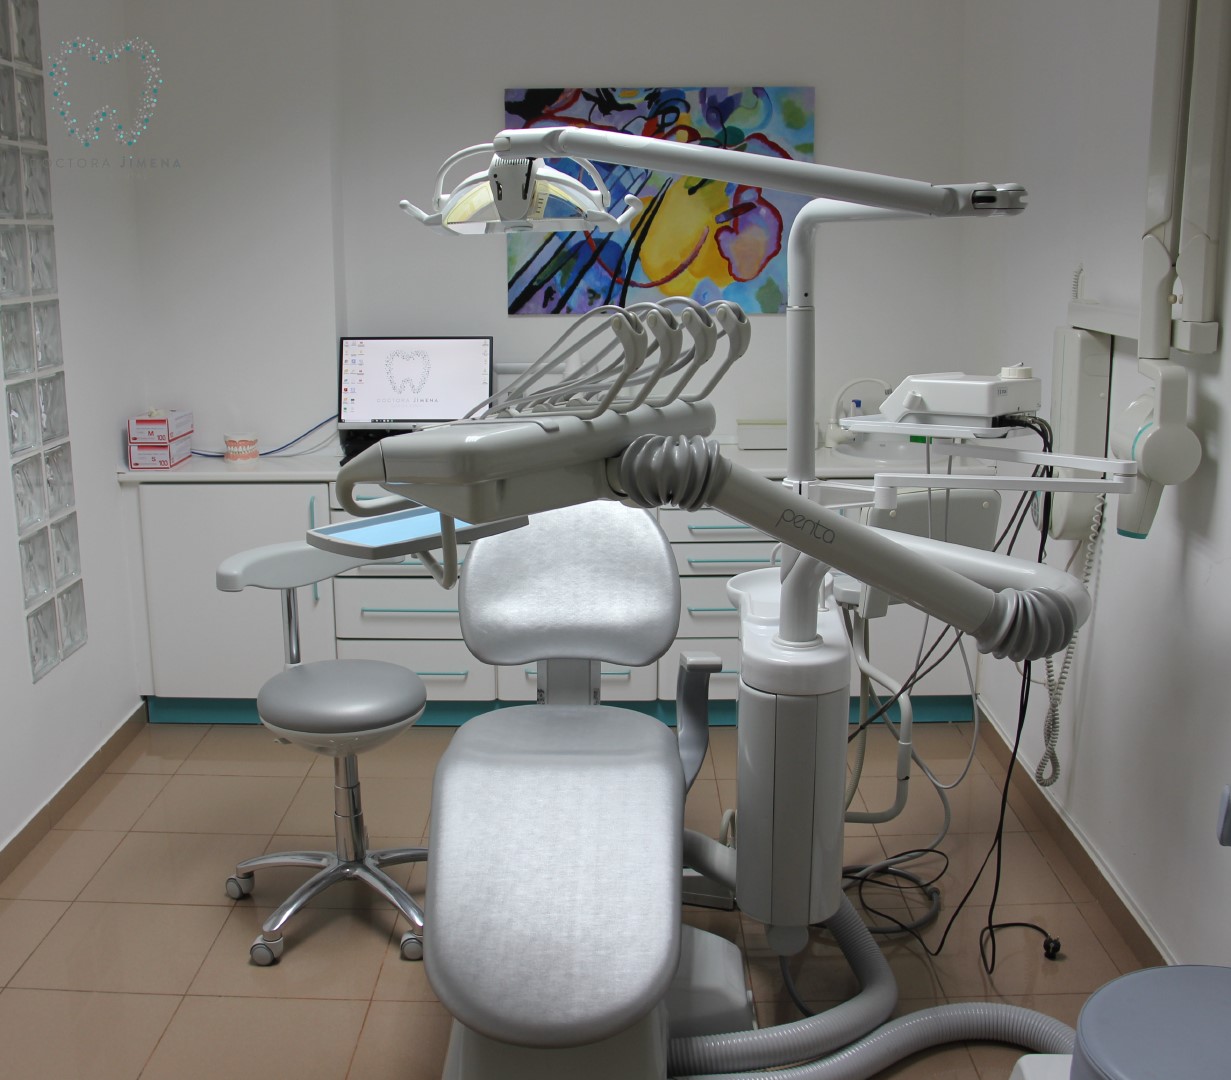 Clínica Dental en Málaga Doctora Jimena